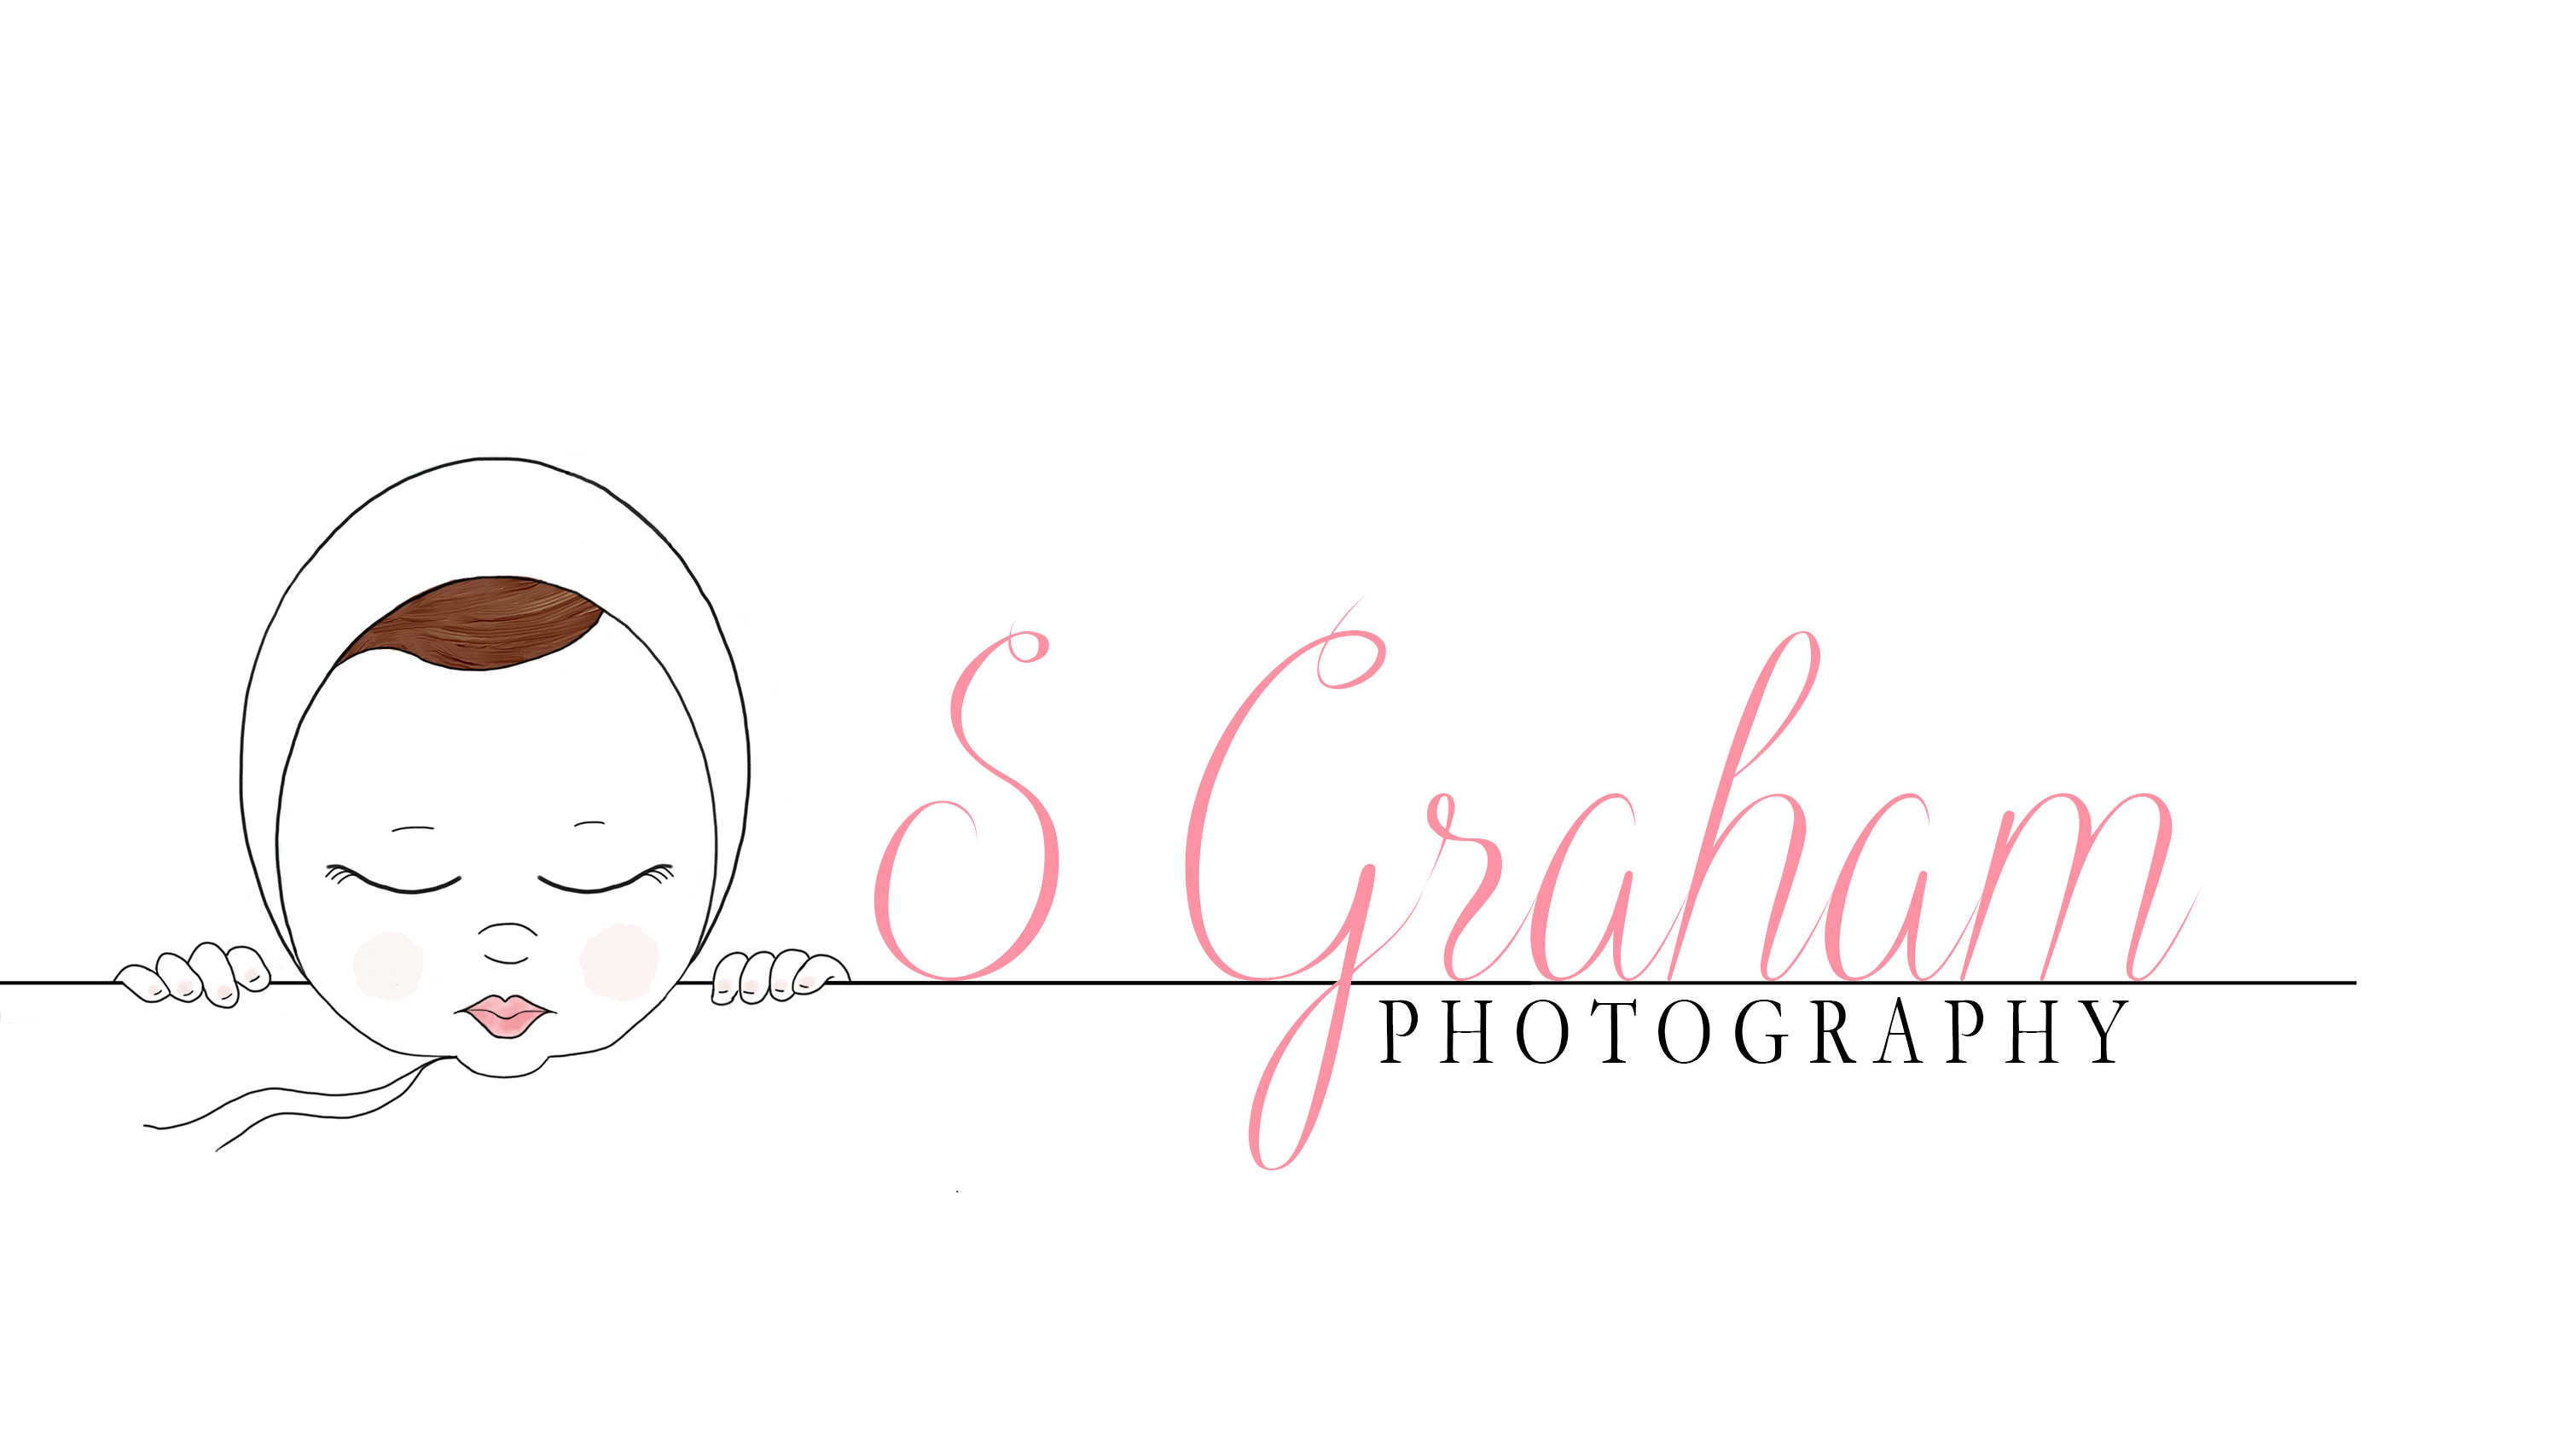 S. Graham Photography